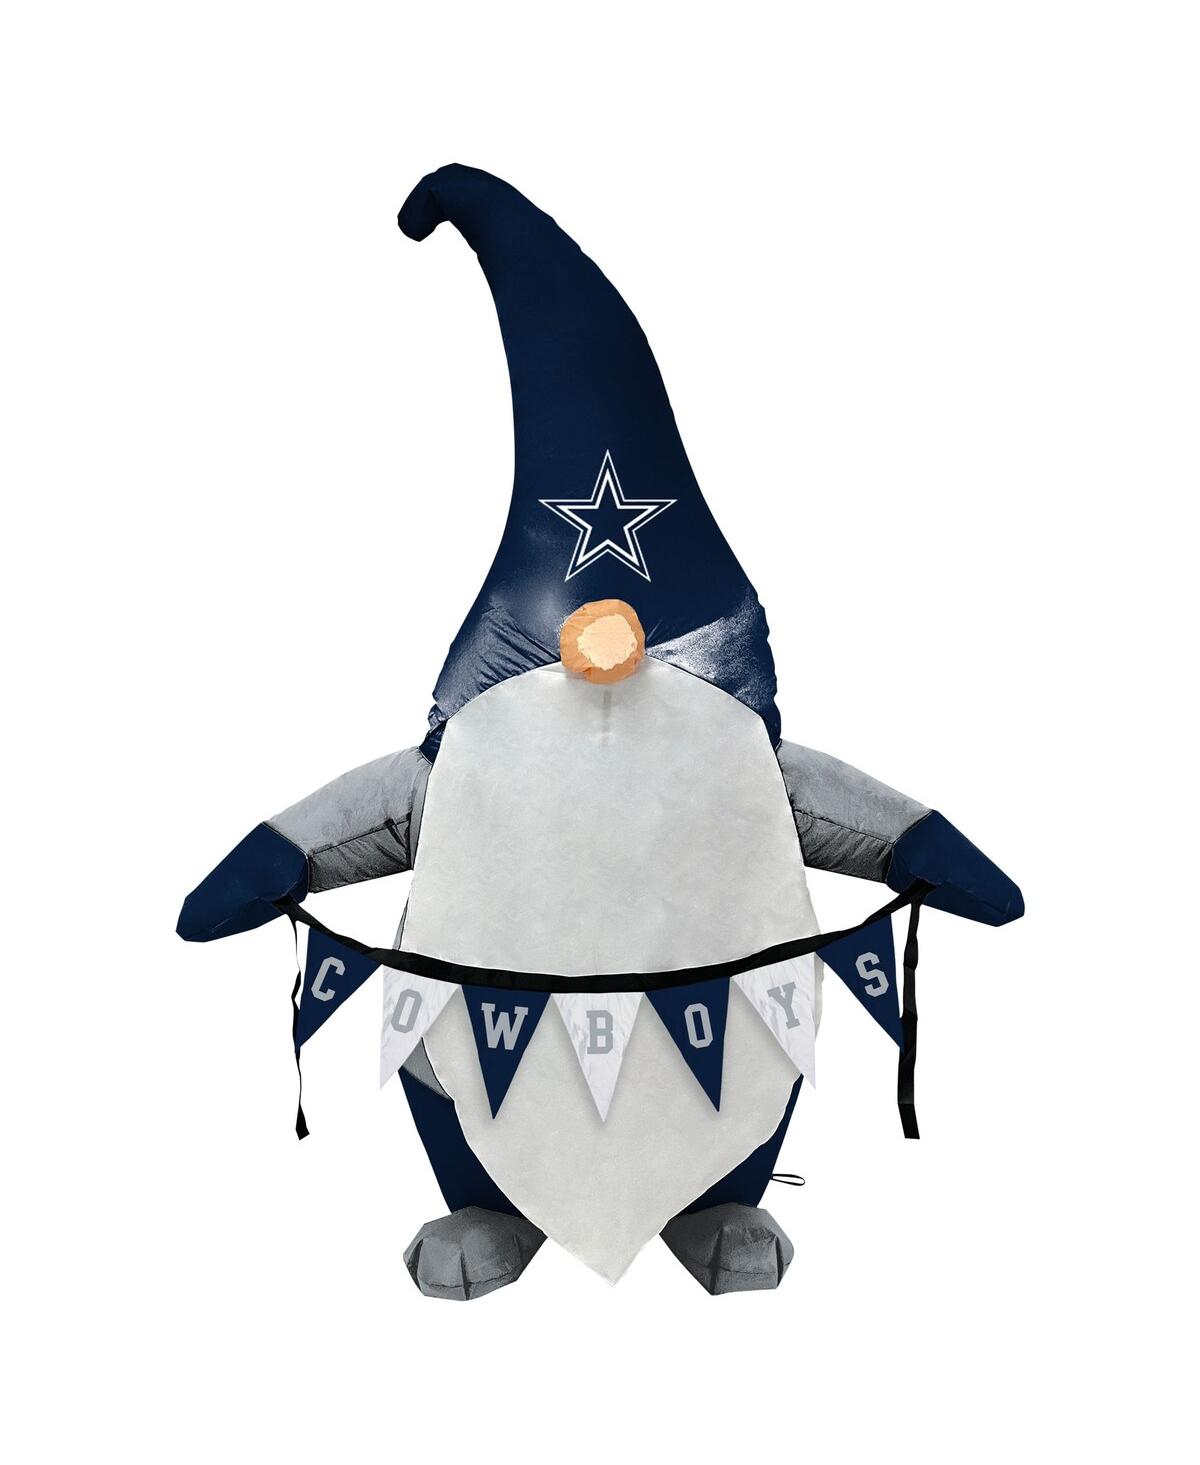 Pegasus Dallas Cowboys Inflatable Gnome - Navy